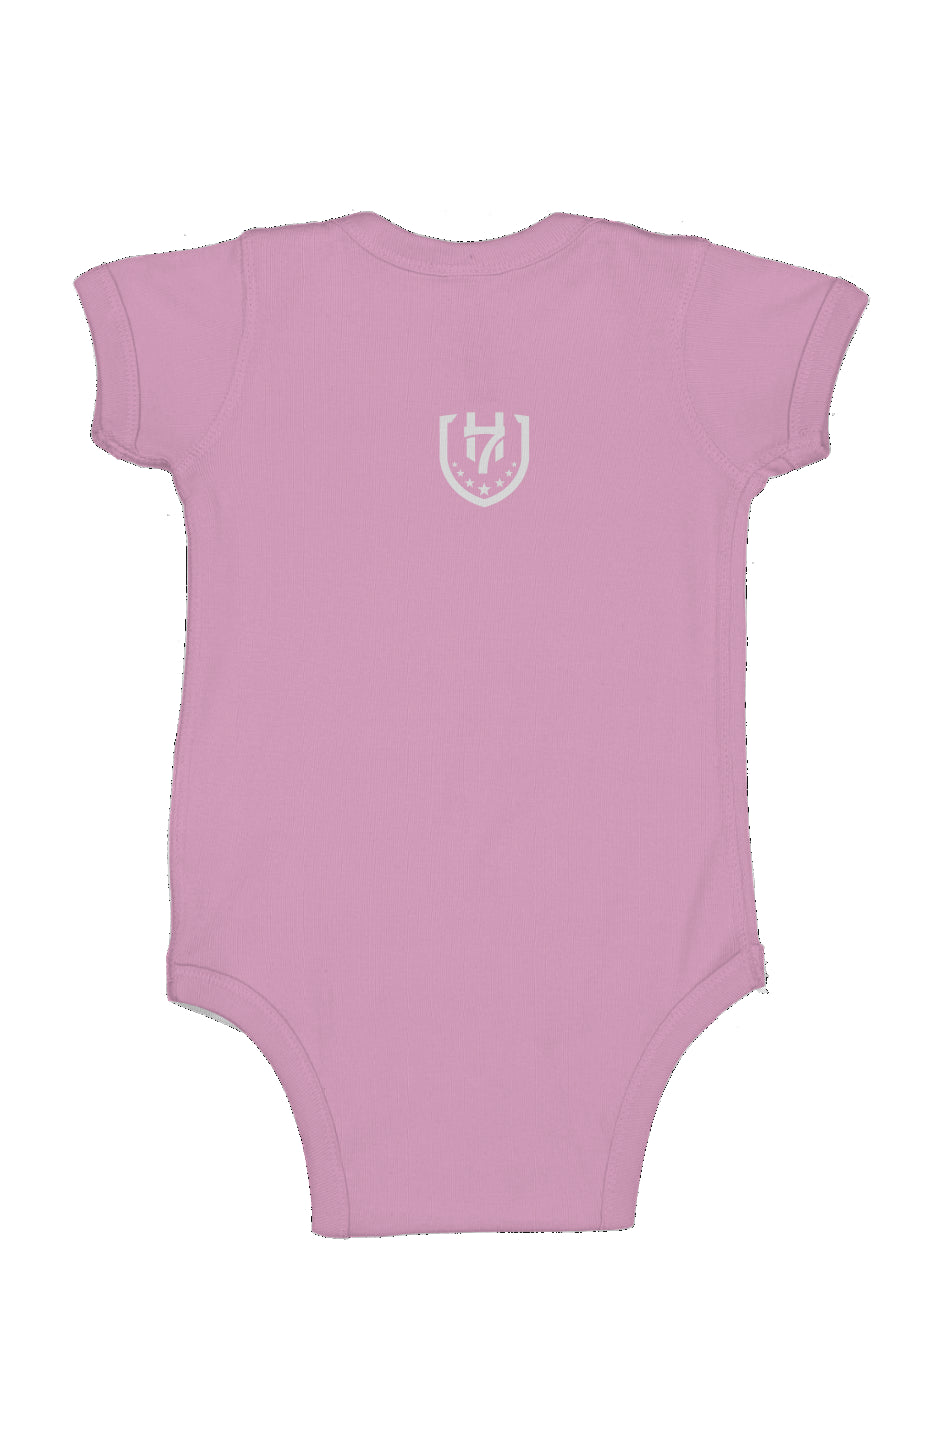 H7 Pink/White Infant Fine Jersey Bodysuit